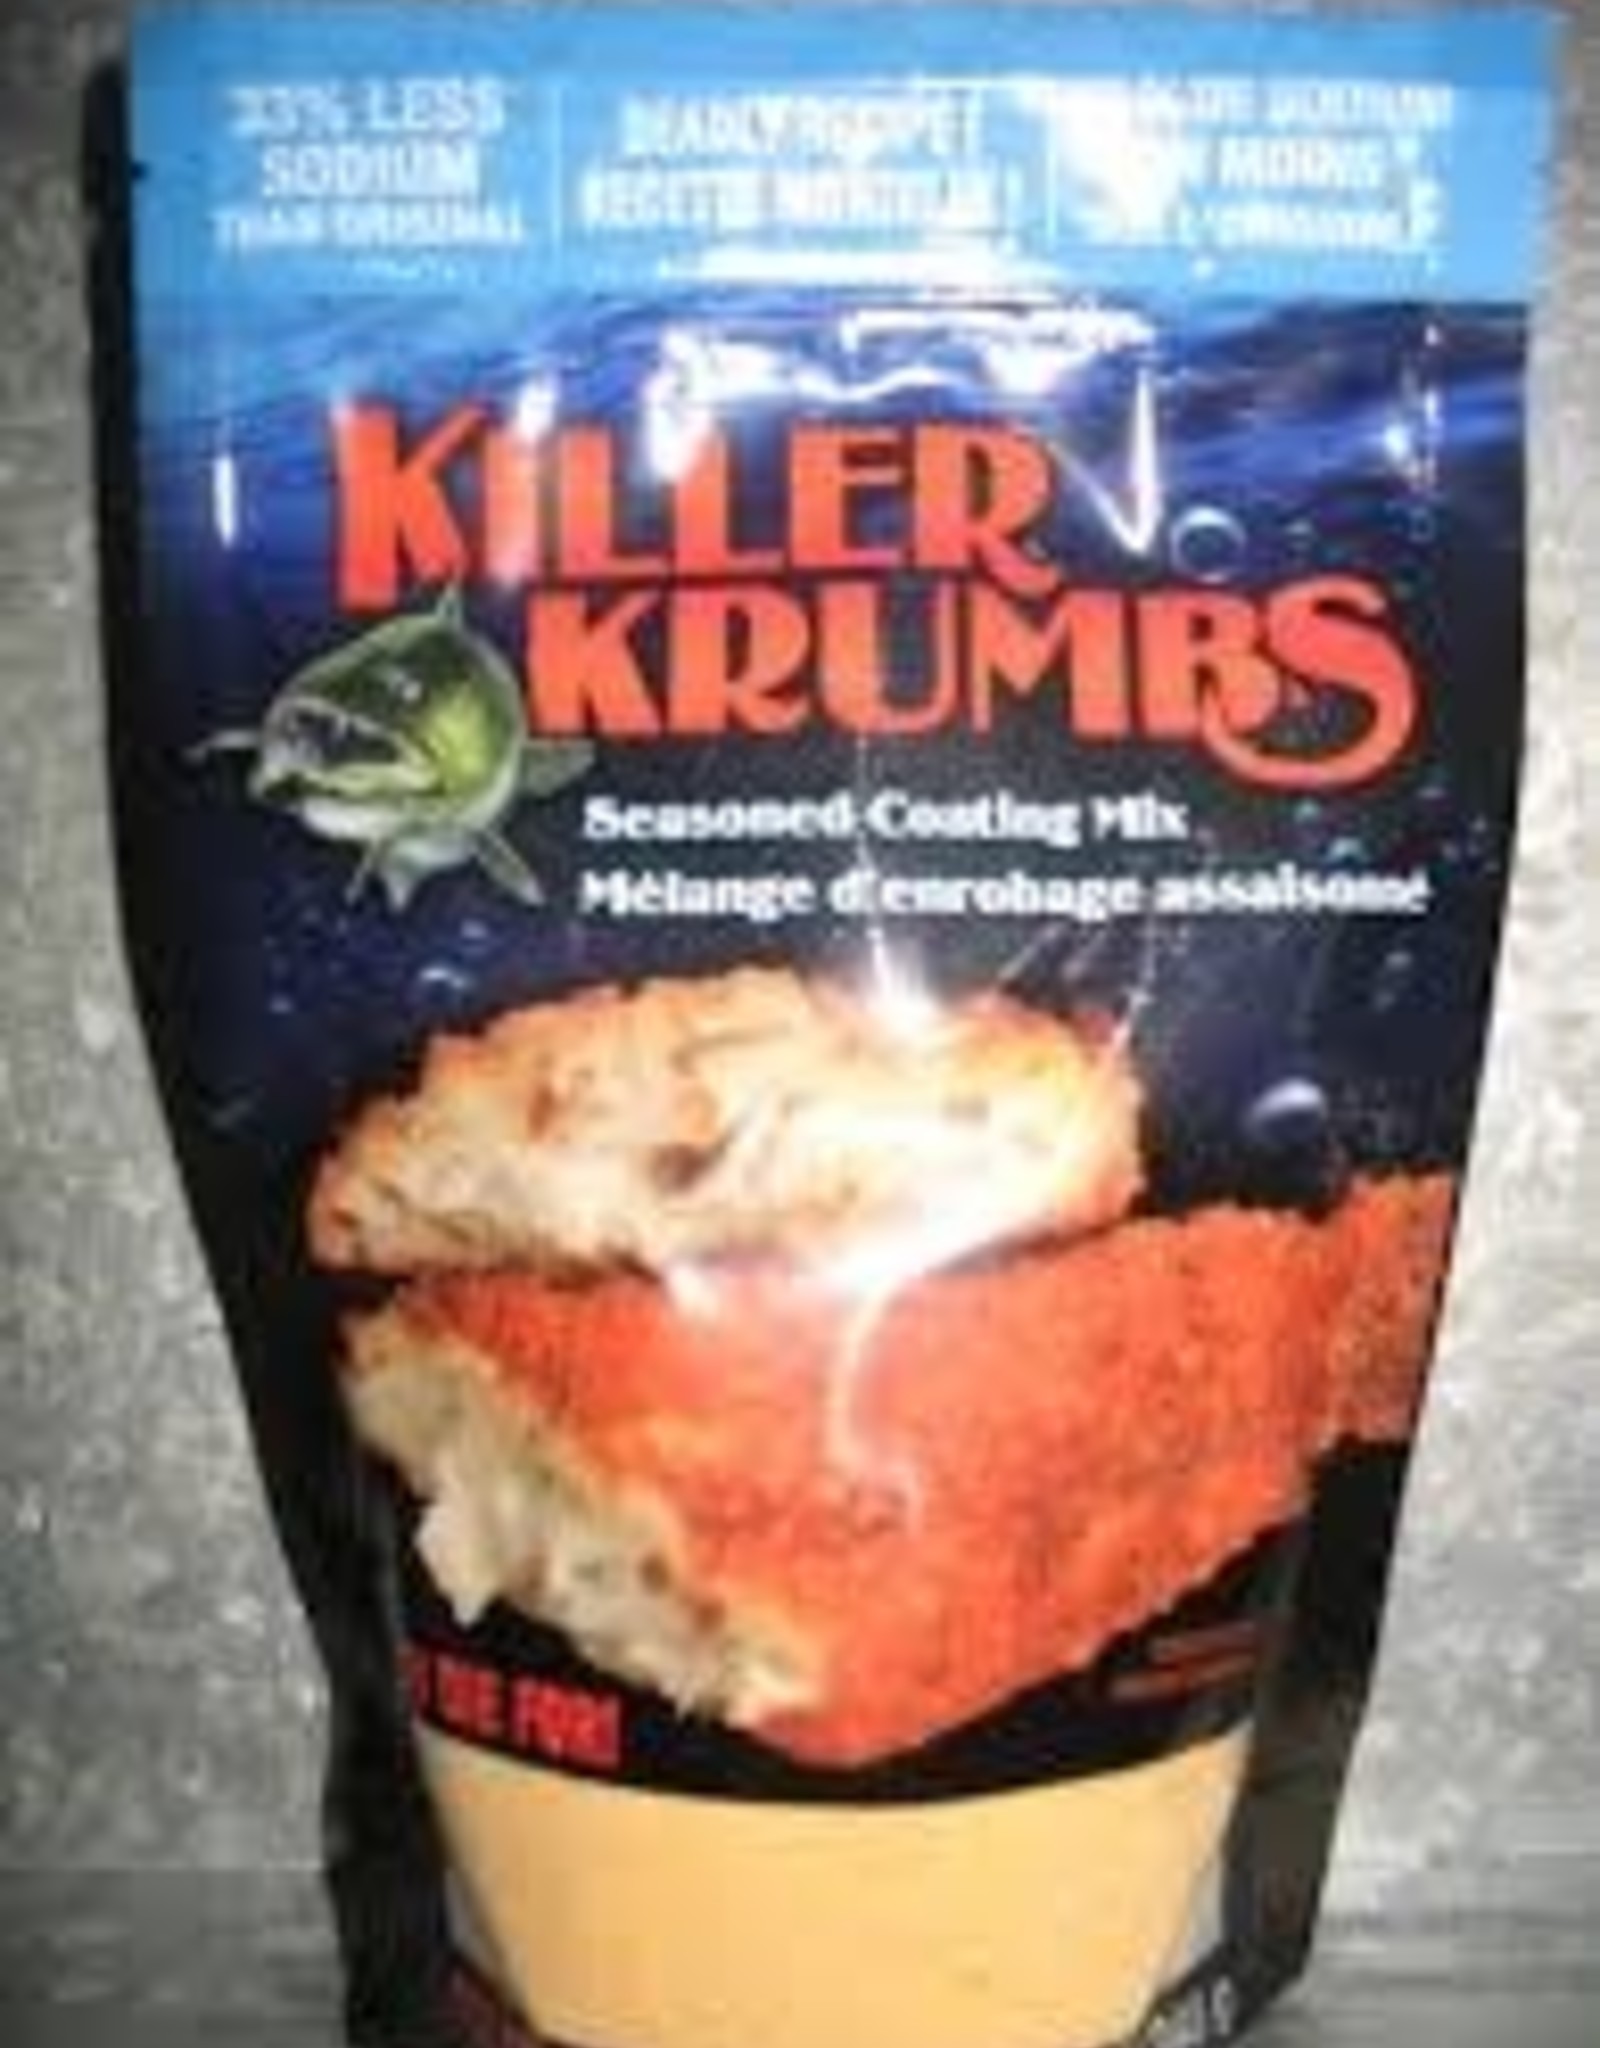 Killer Krumbs Killer Krumbs 33% less Sodium